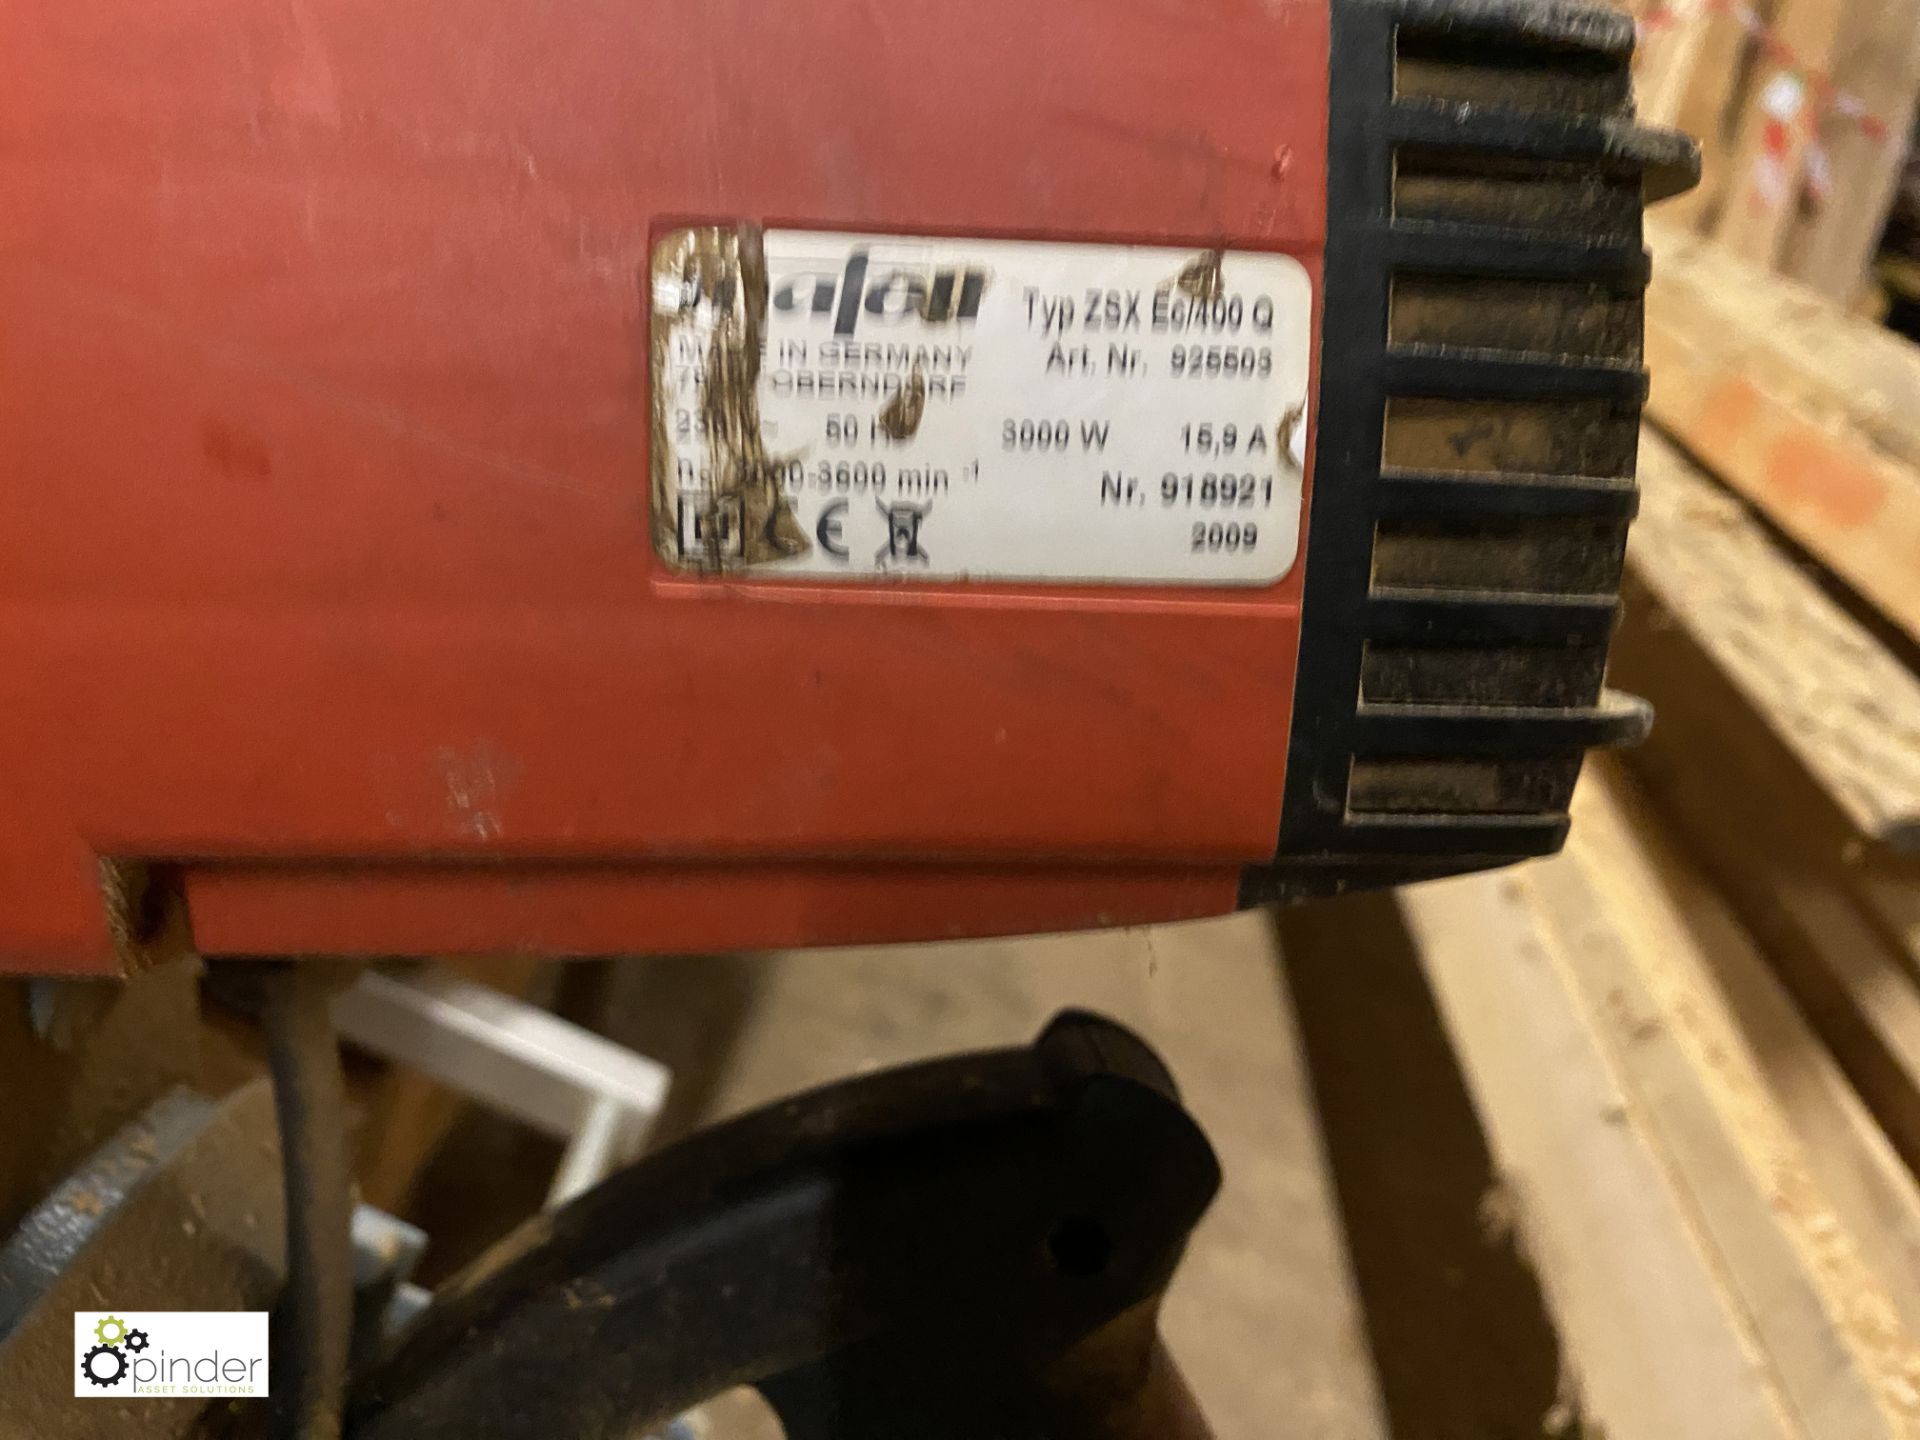 Mafell ZSX Ec 400 Q Carpenters Chain Saw, 240volts (LOCATION: Harbury) - Image 4 of 5